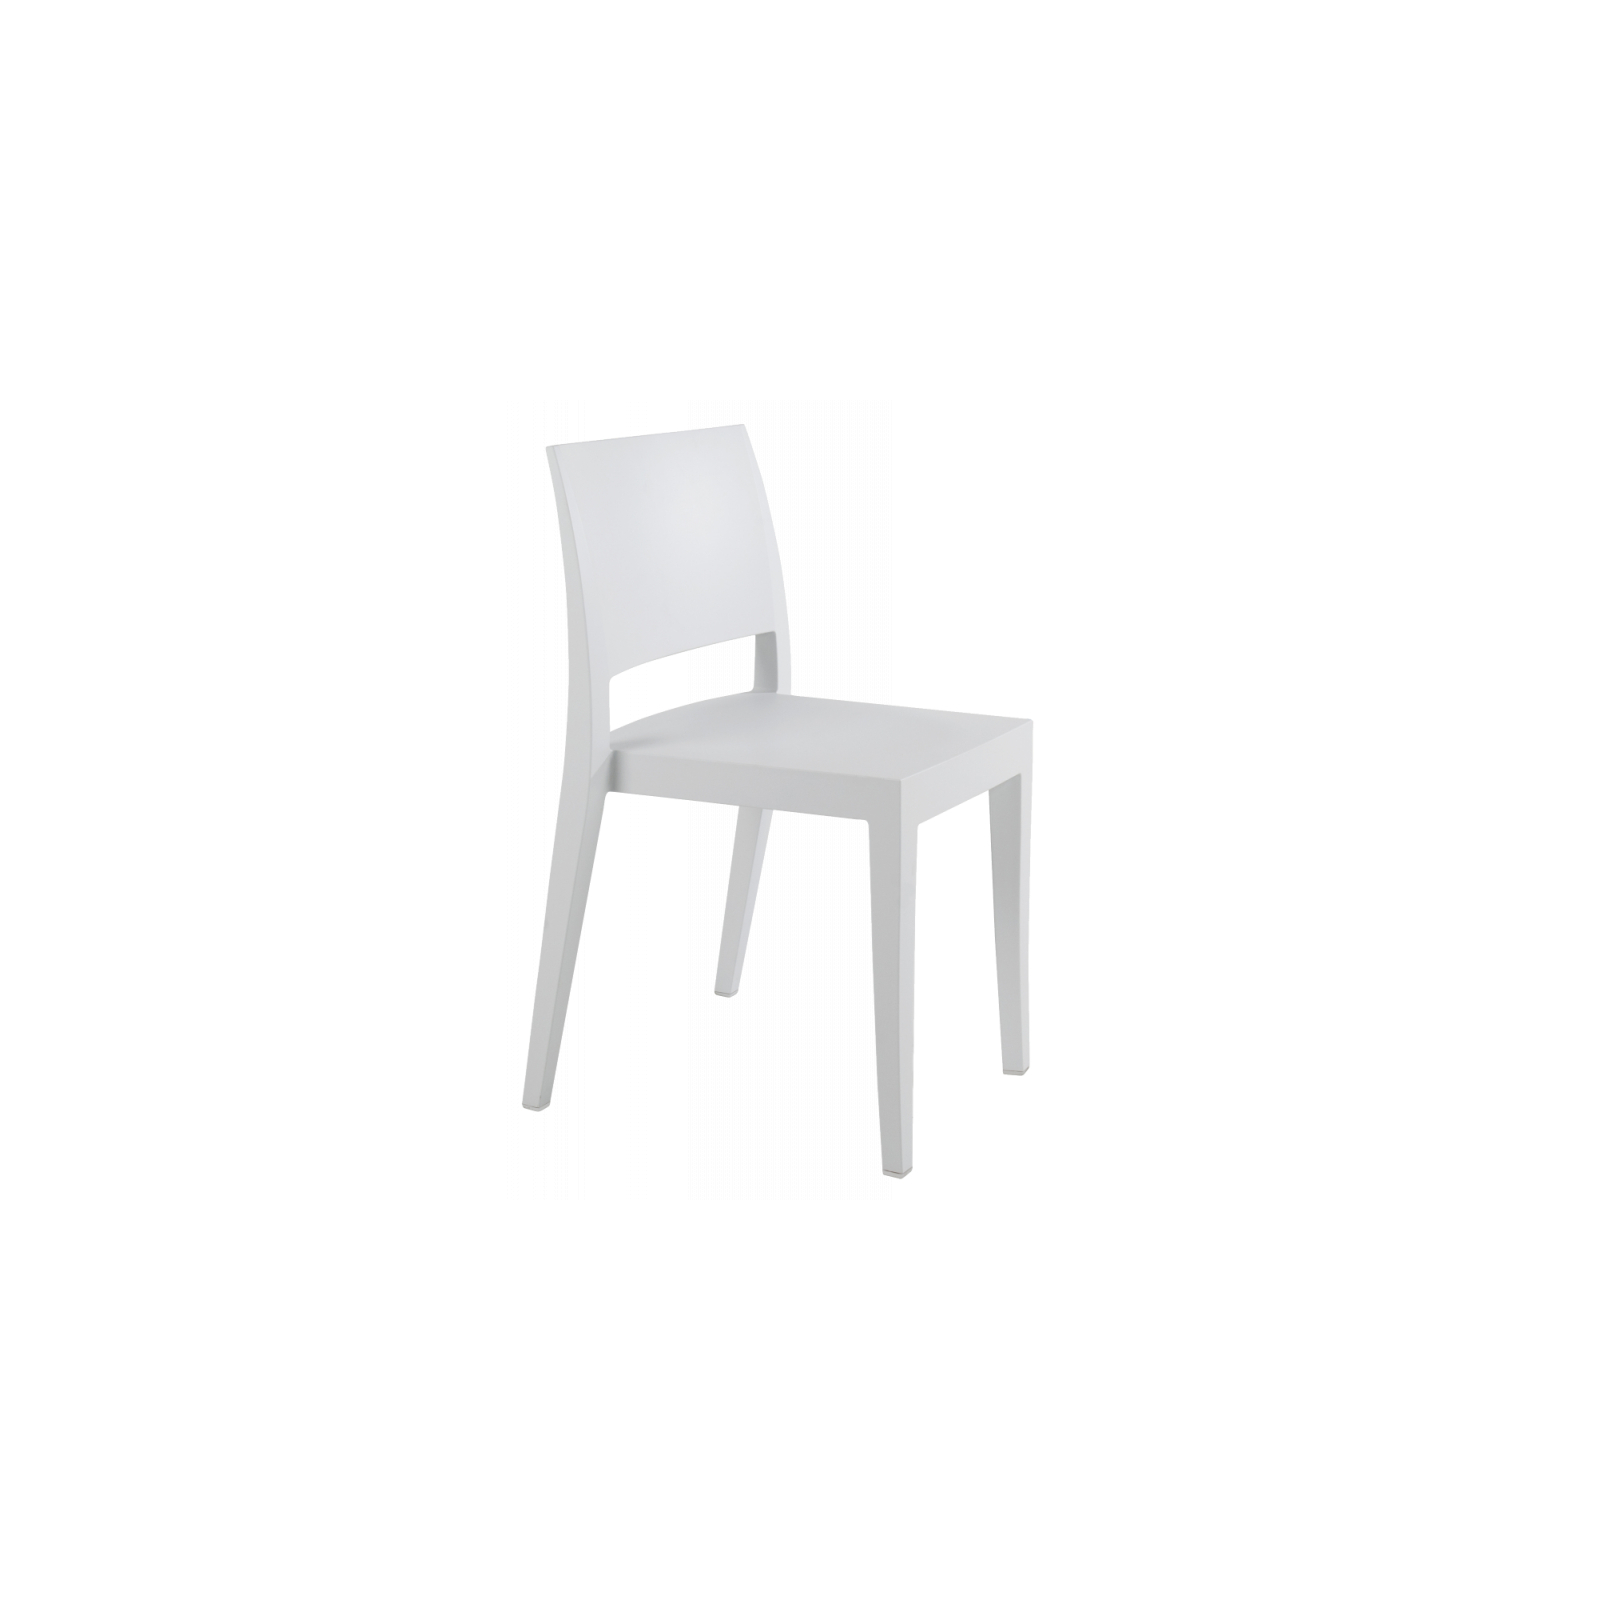 Кухонный стул PAPATYA gyza матовый белый (2259)